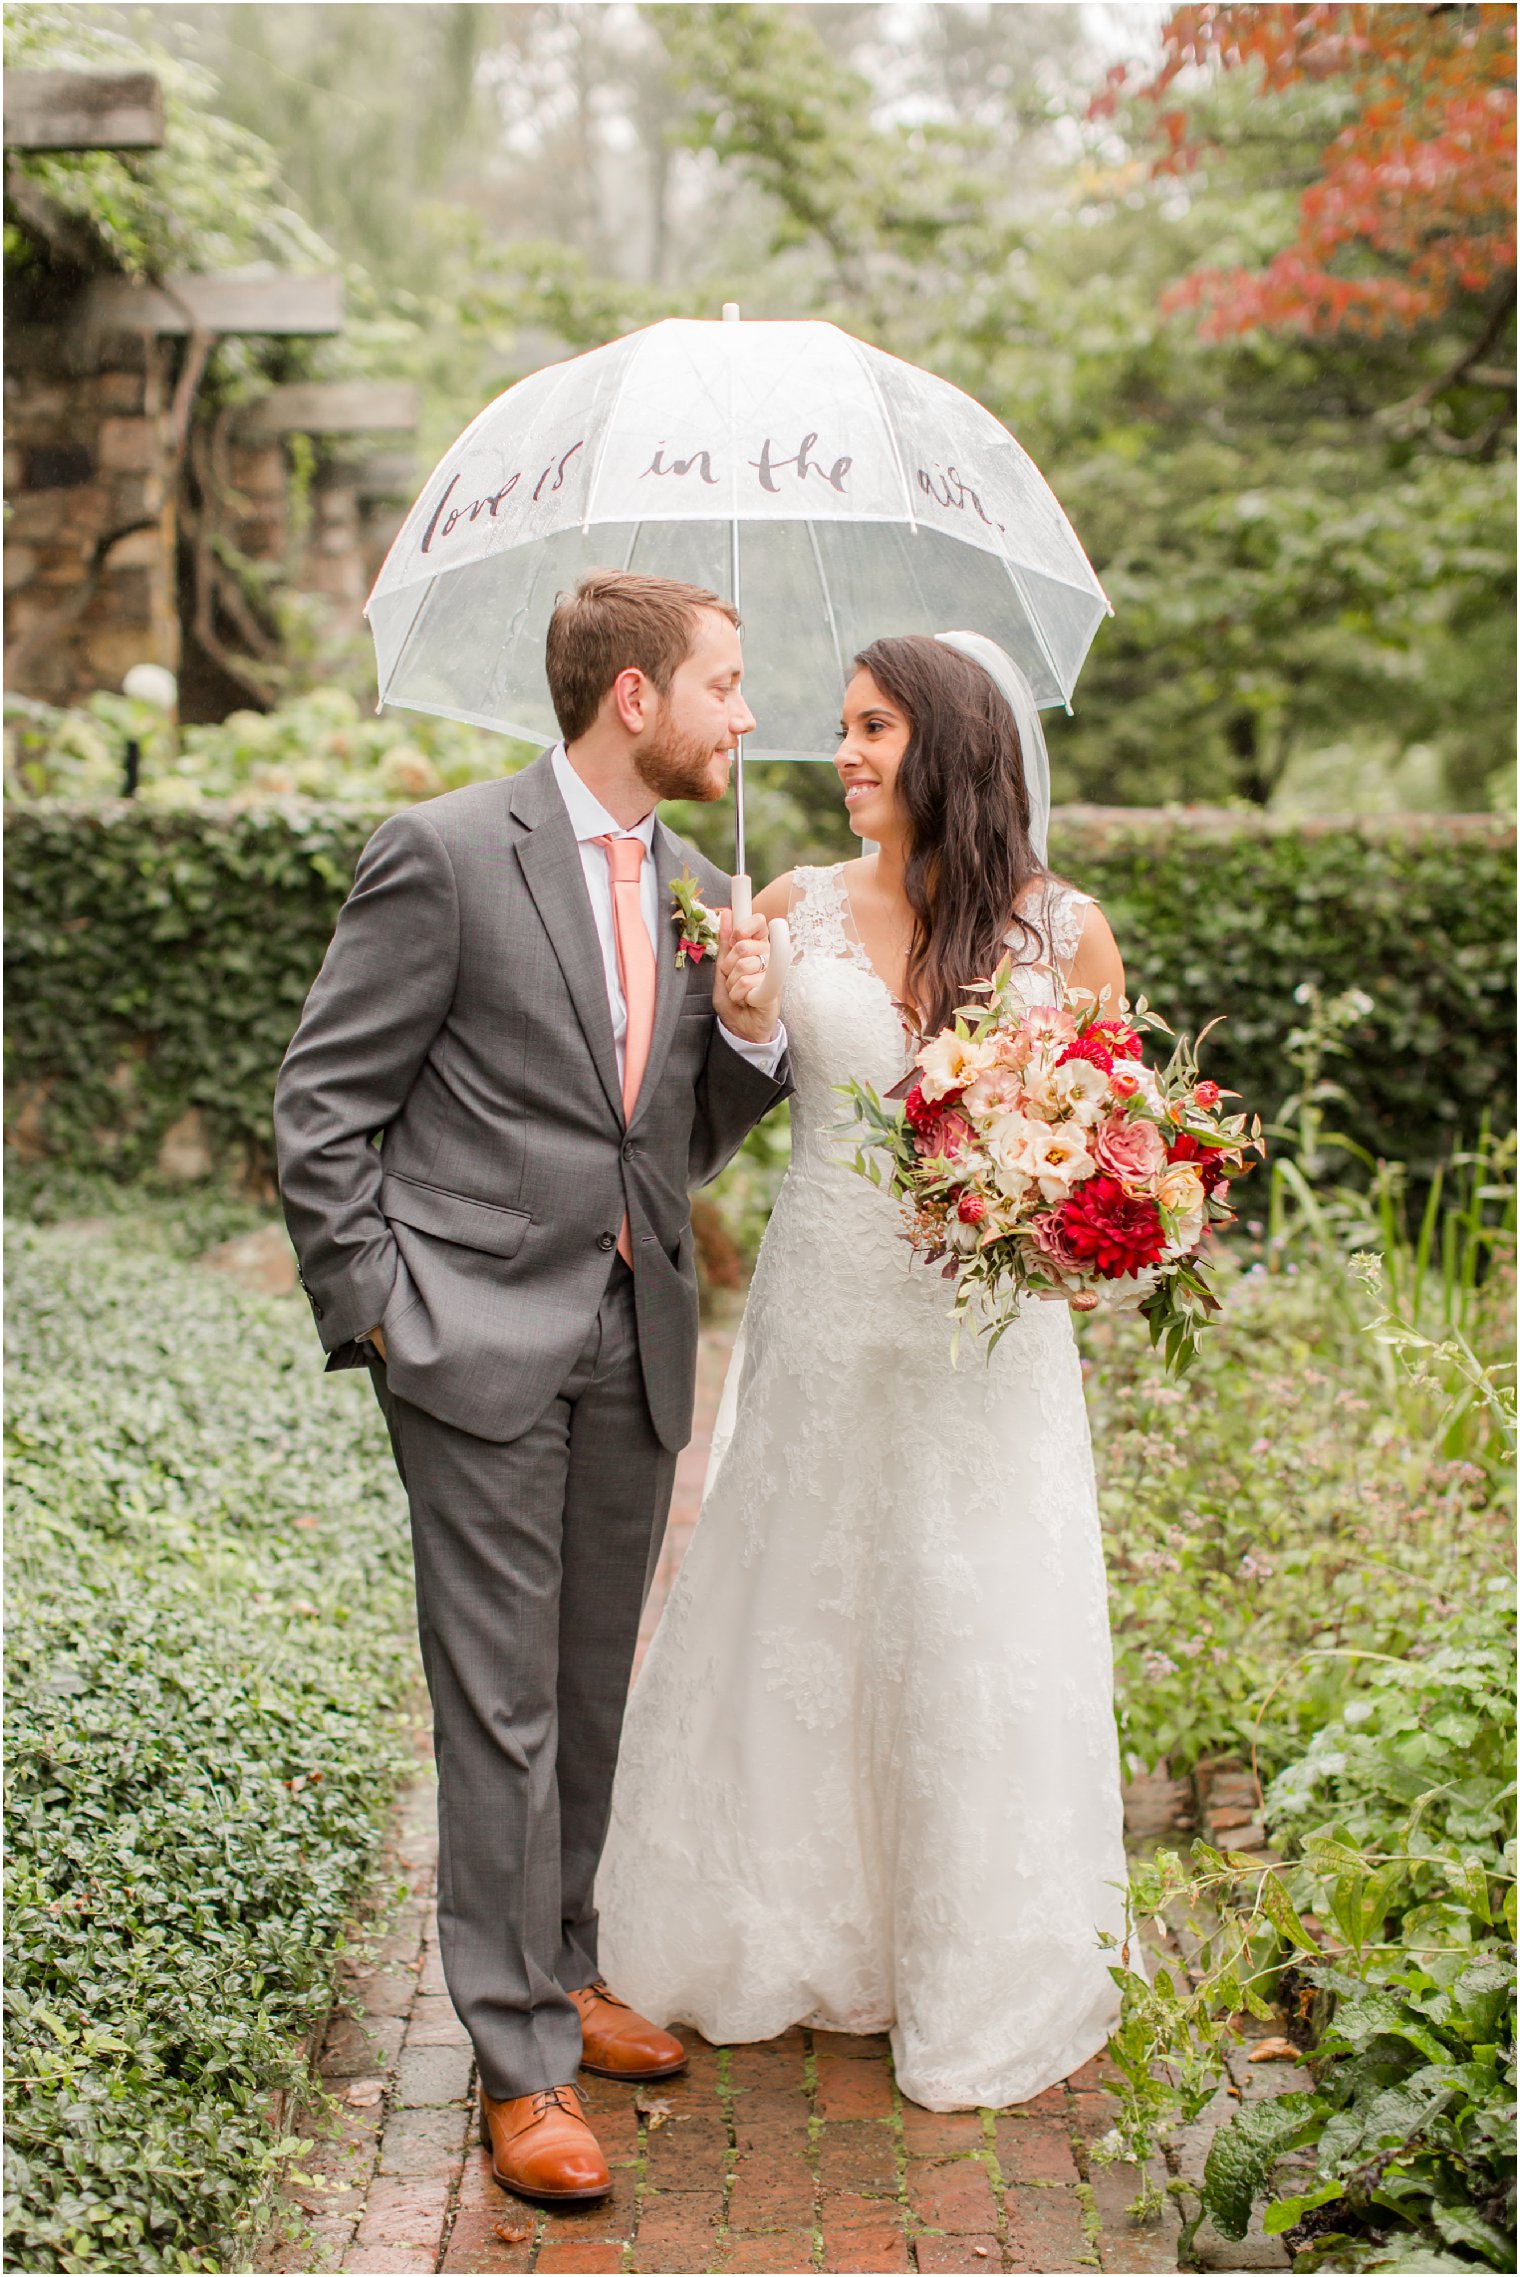 rainy day wedding portraits photographed by Idalia Photography at Olde Mill Inn